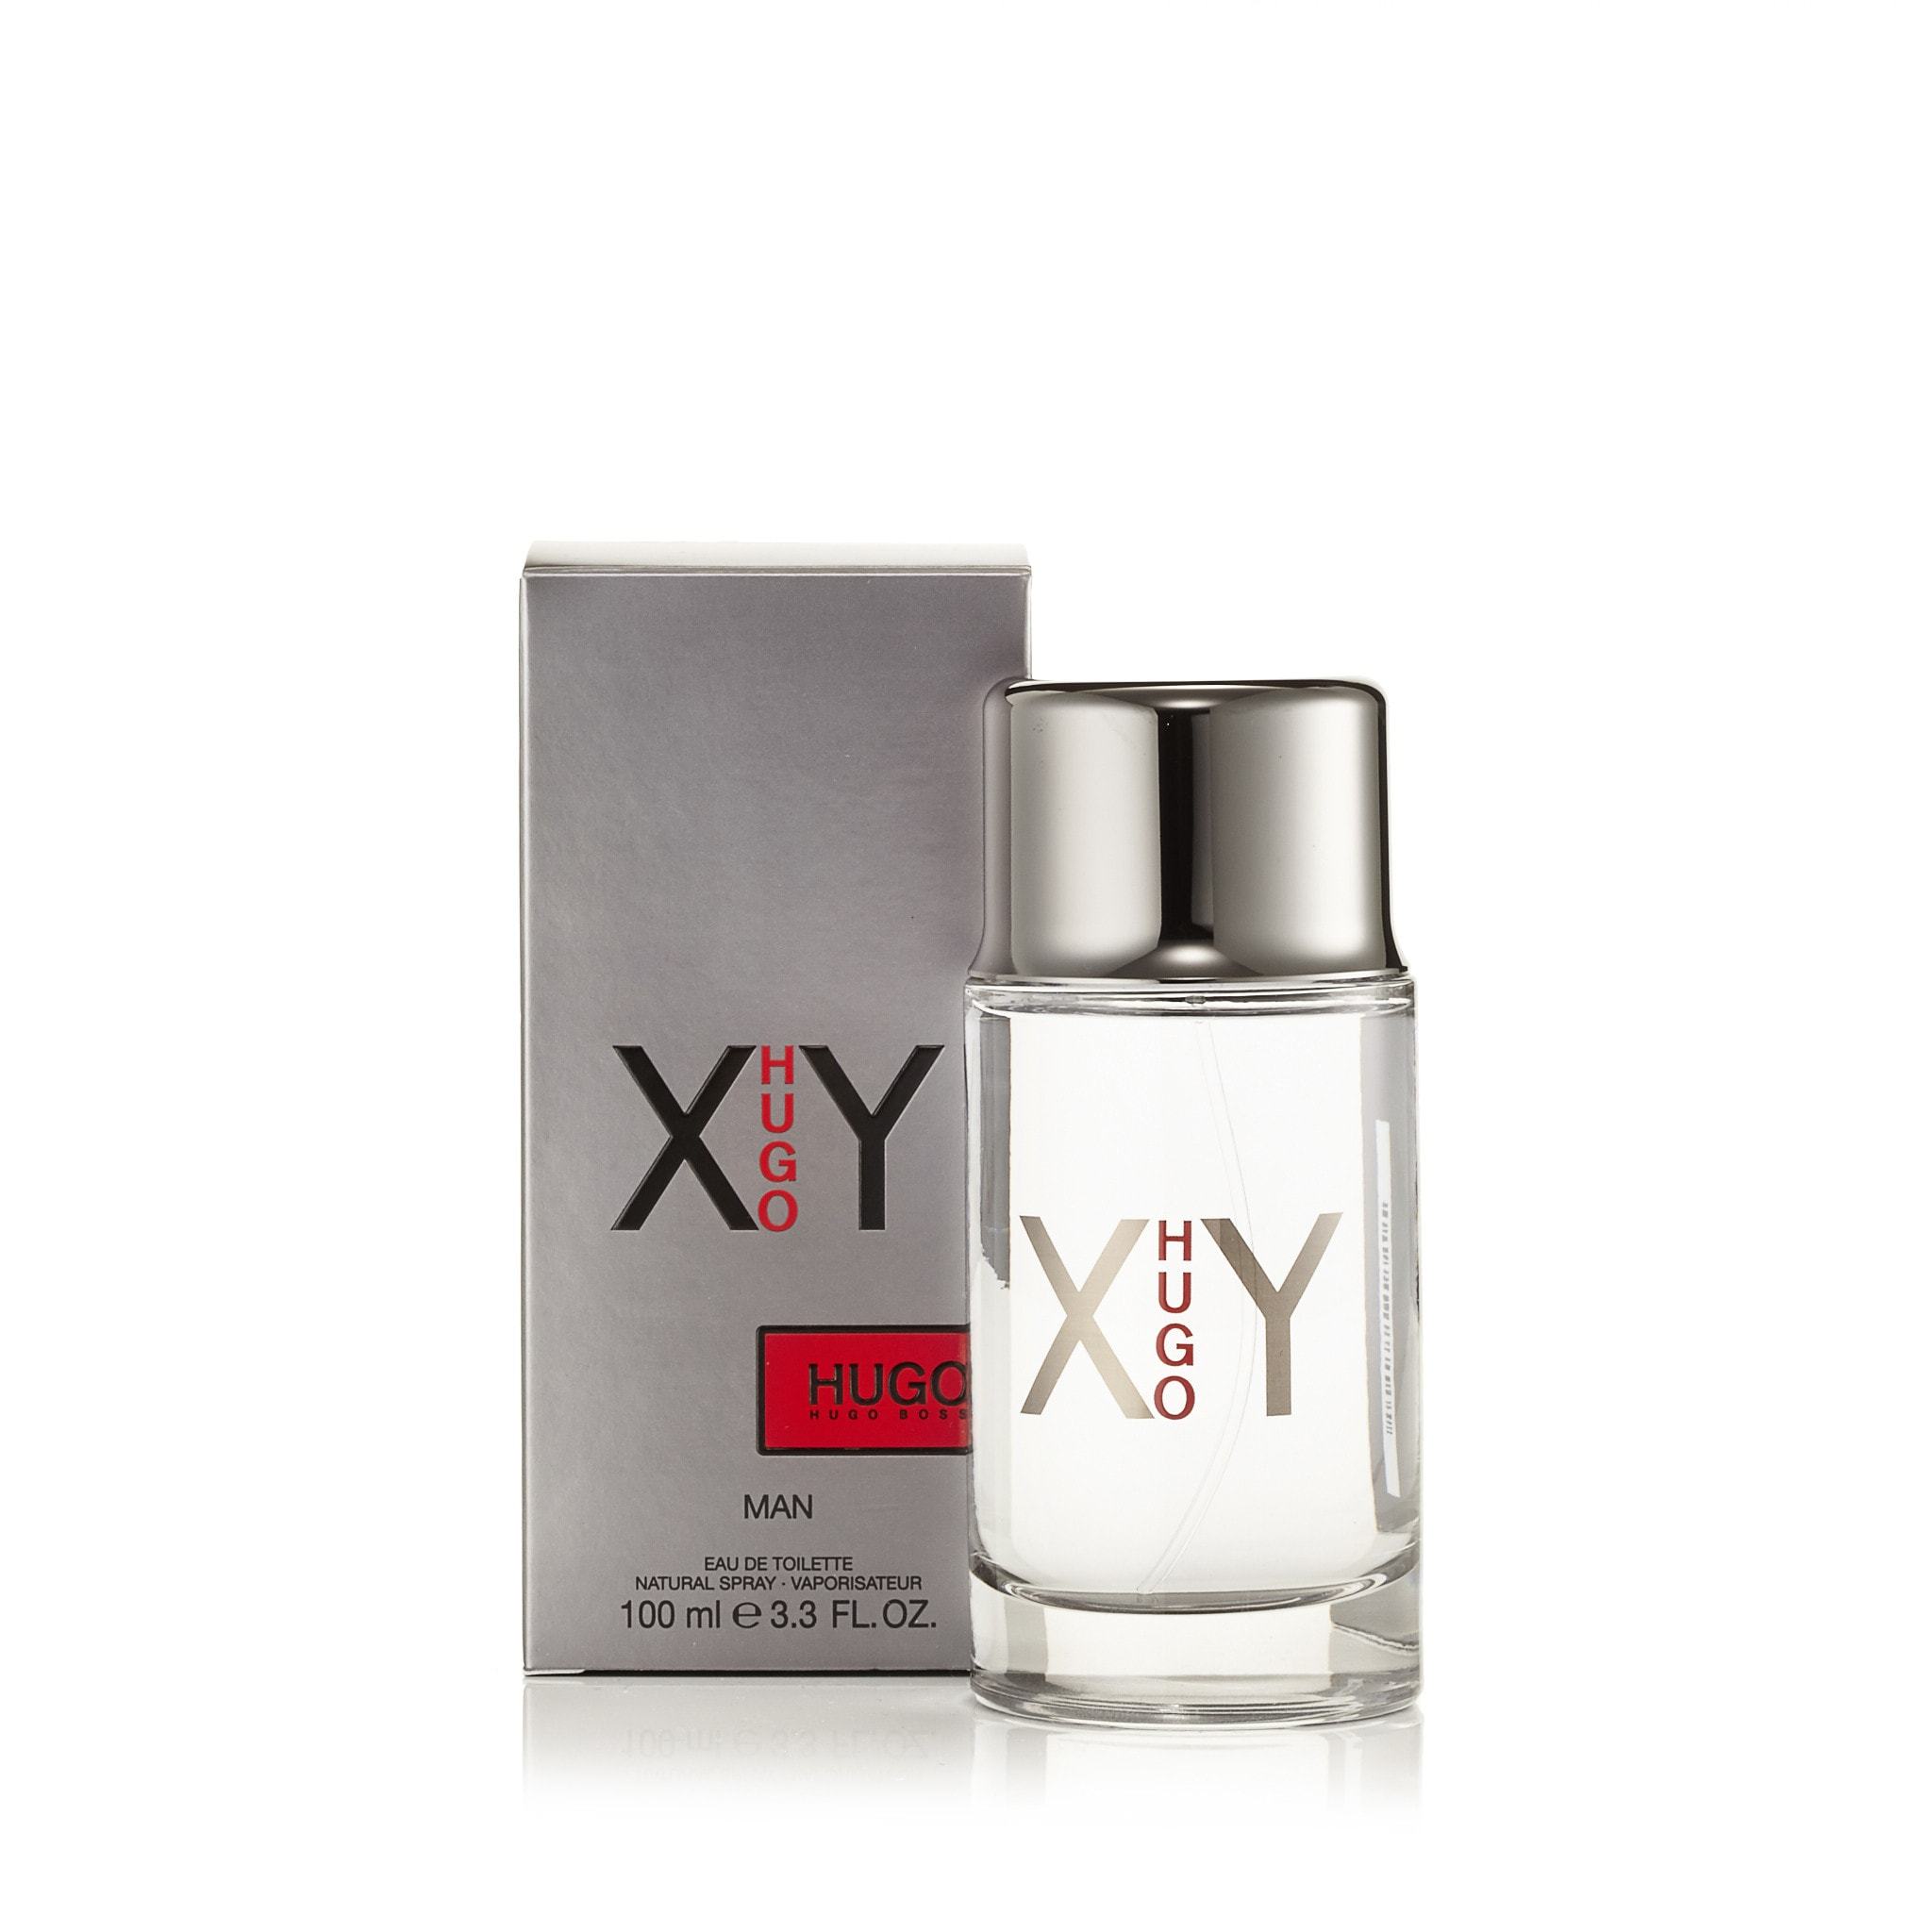 hugo xy perfume price